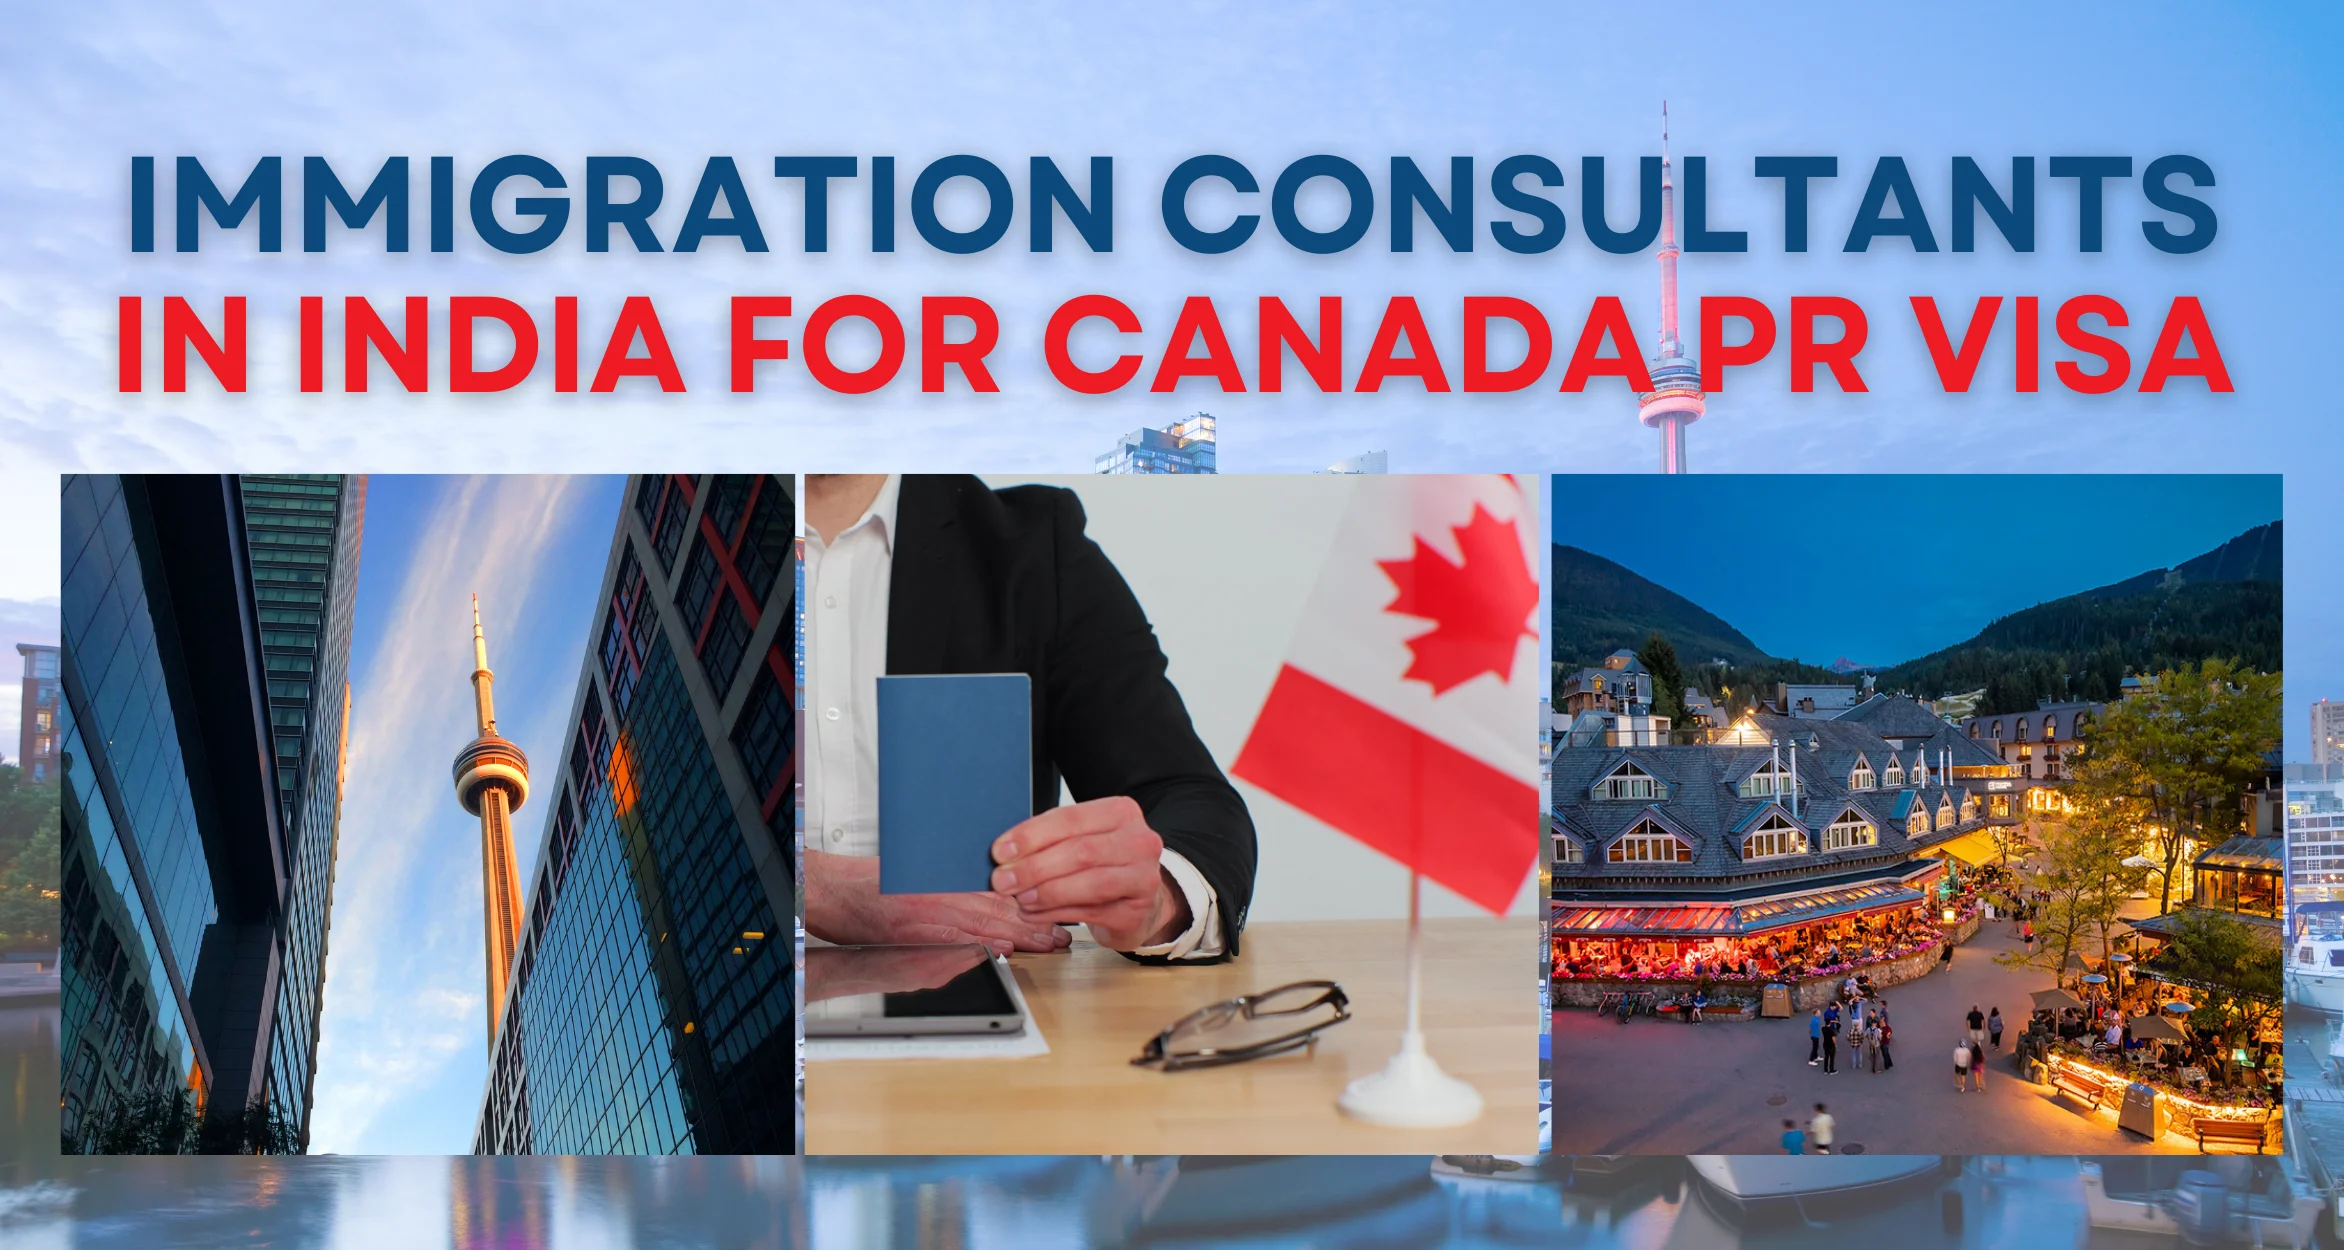 Immigration consultants in India for Canada PR Visa